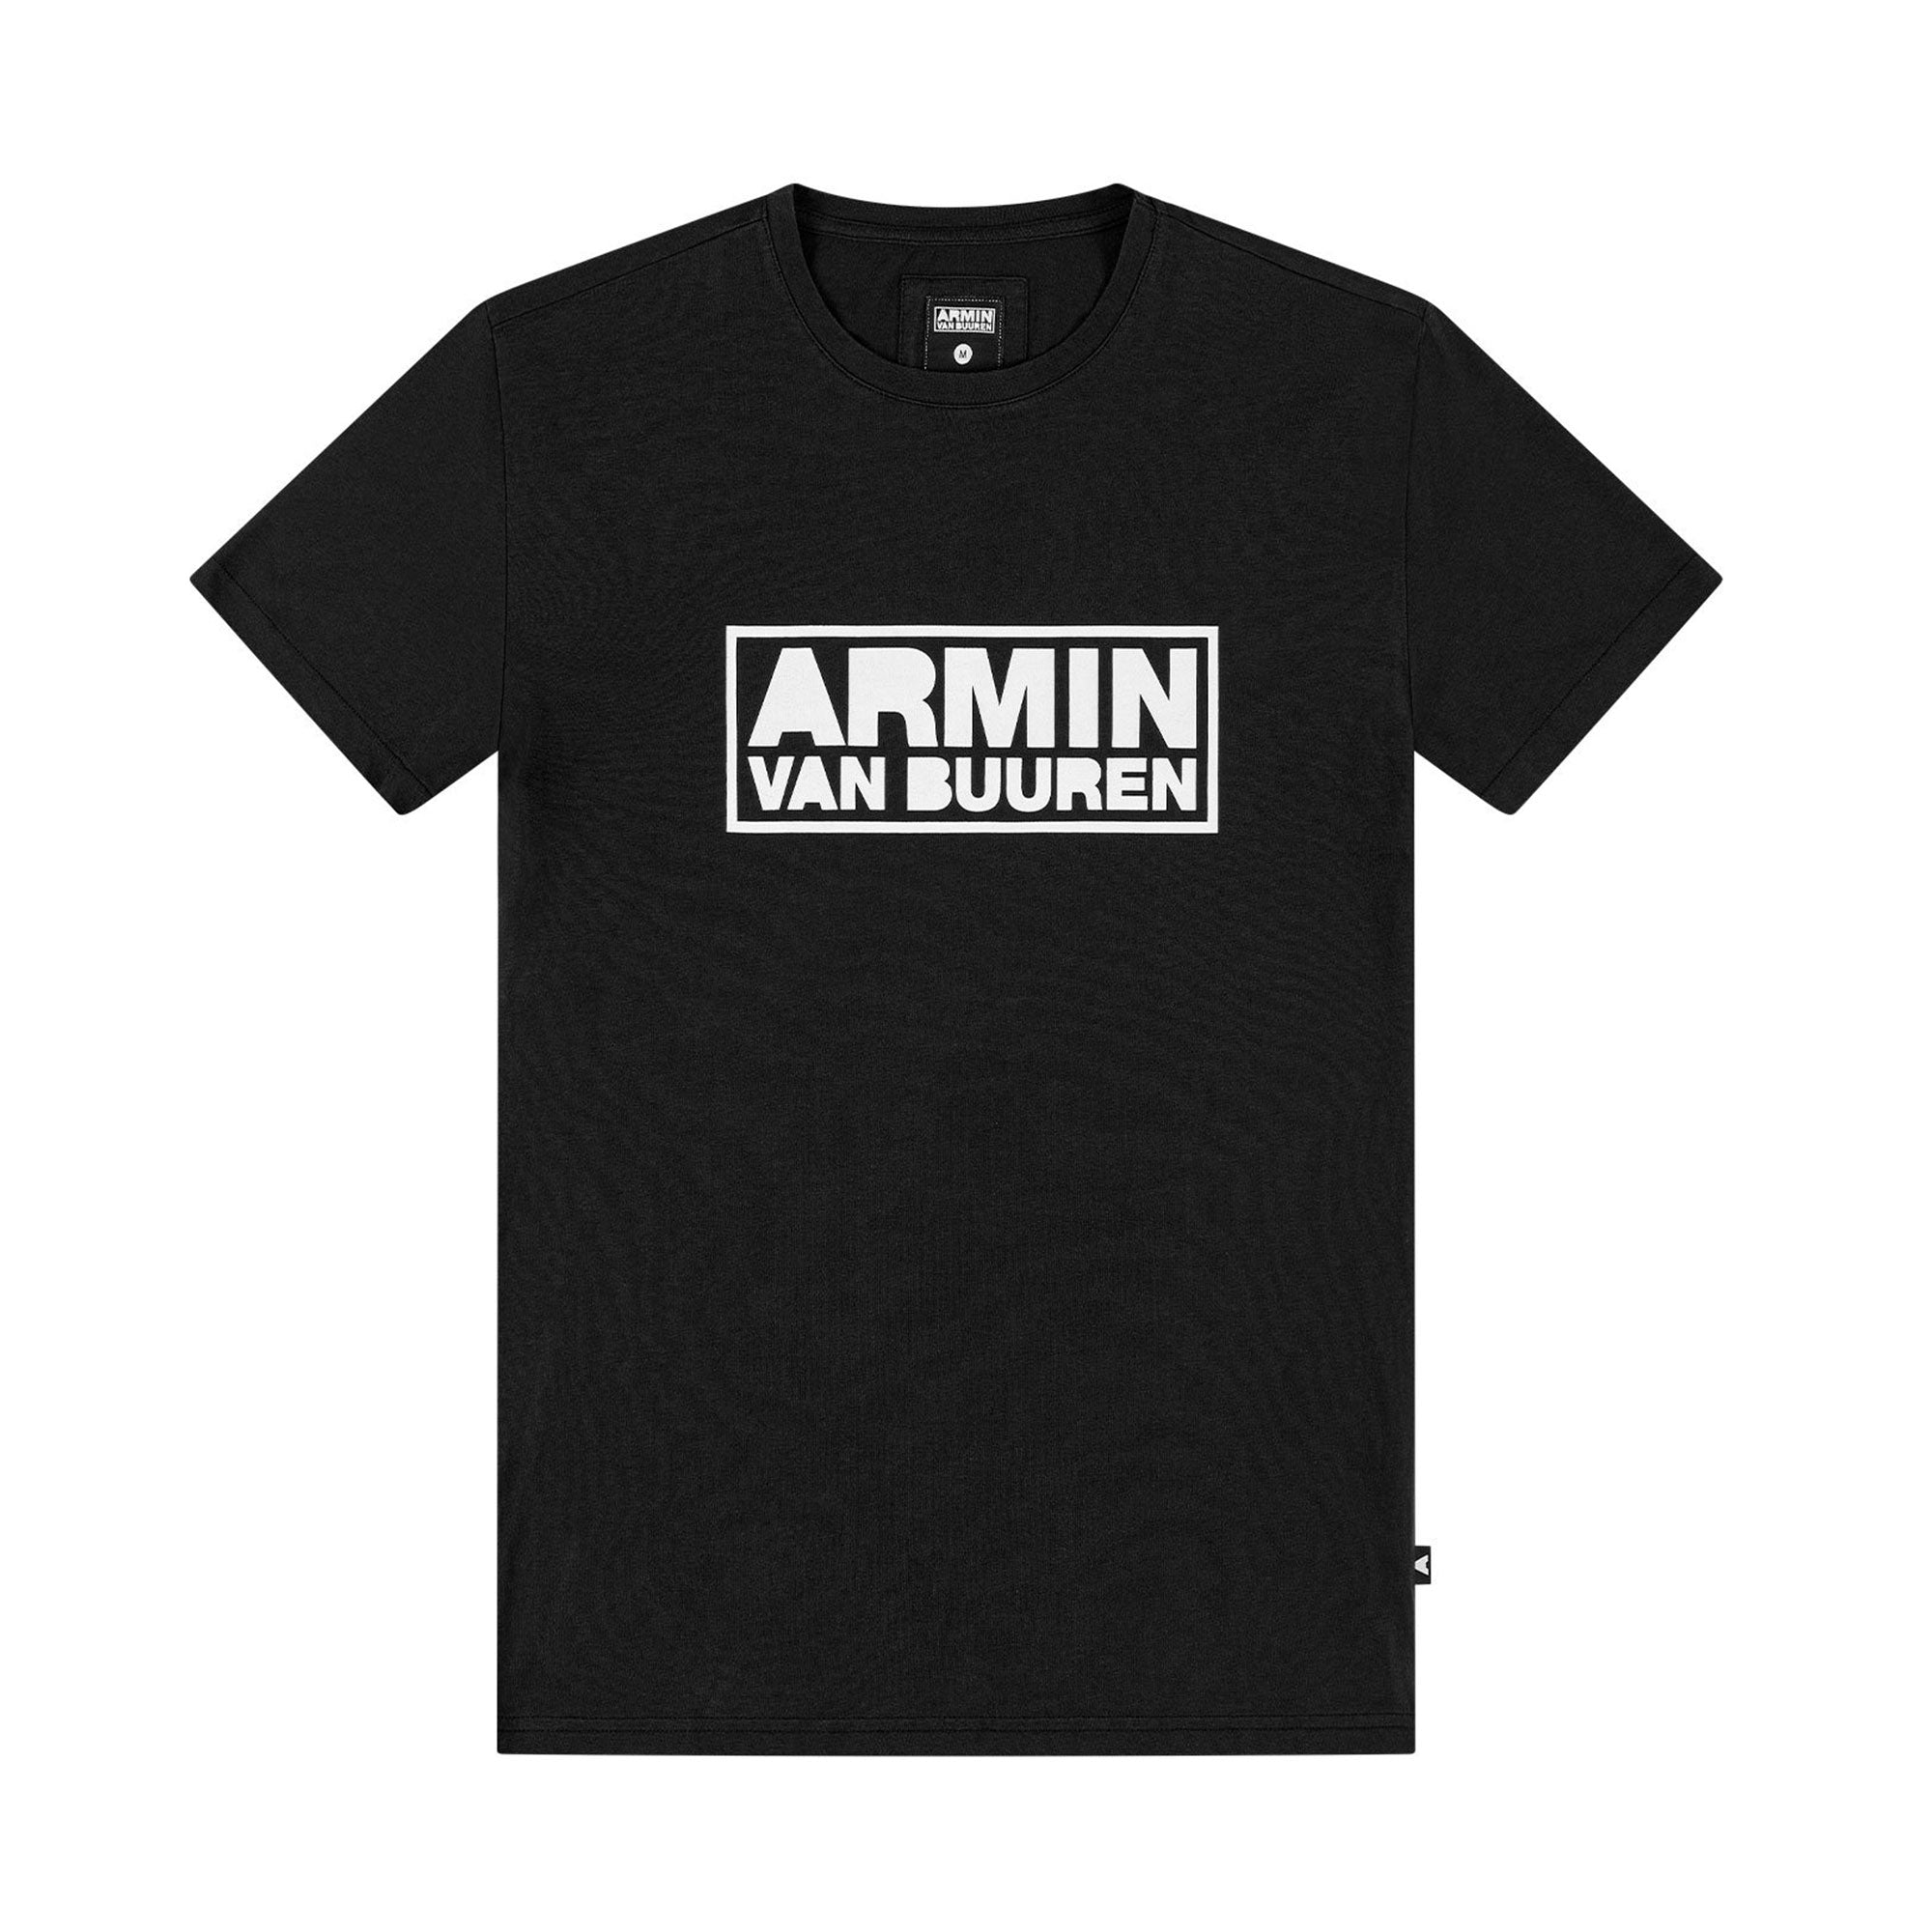 ARMIN VAN BUUREN Armada Logo Eletro Music Men's White Black T-Shirt Size S-3XL